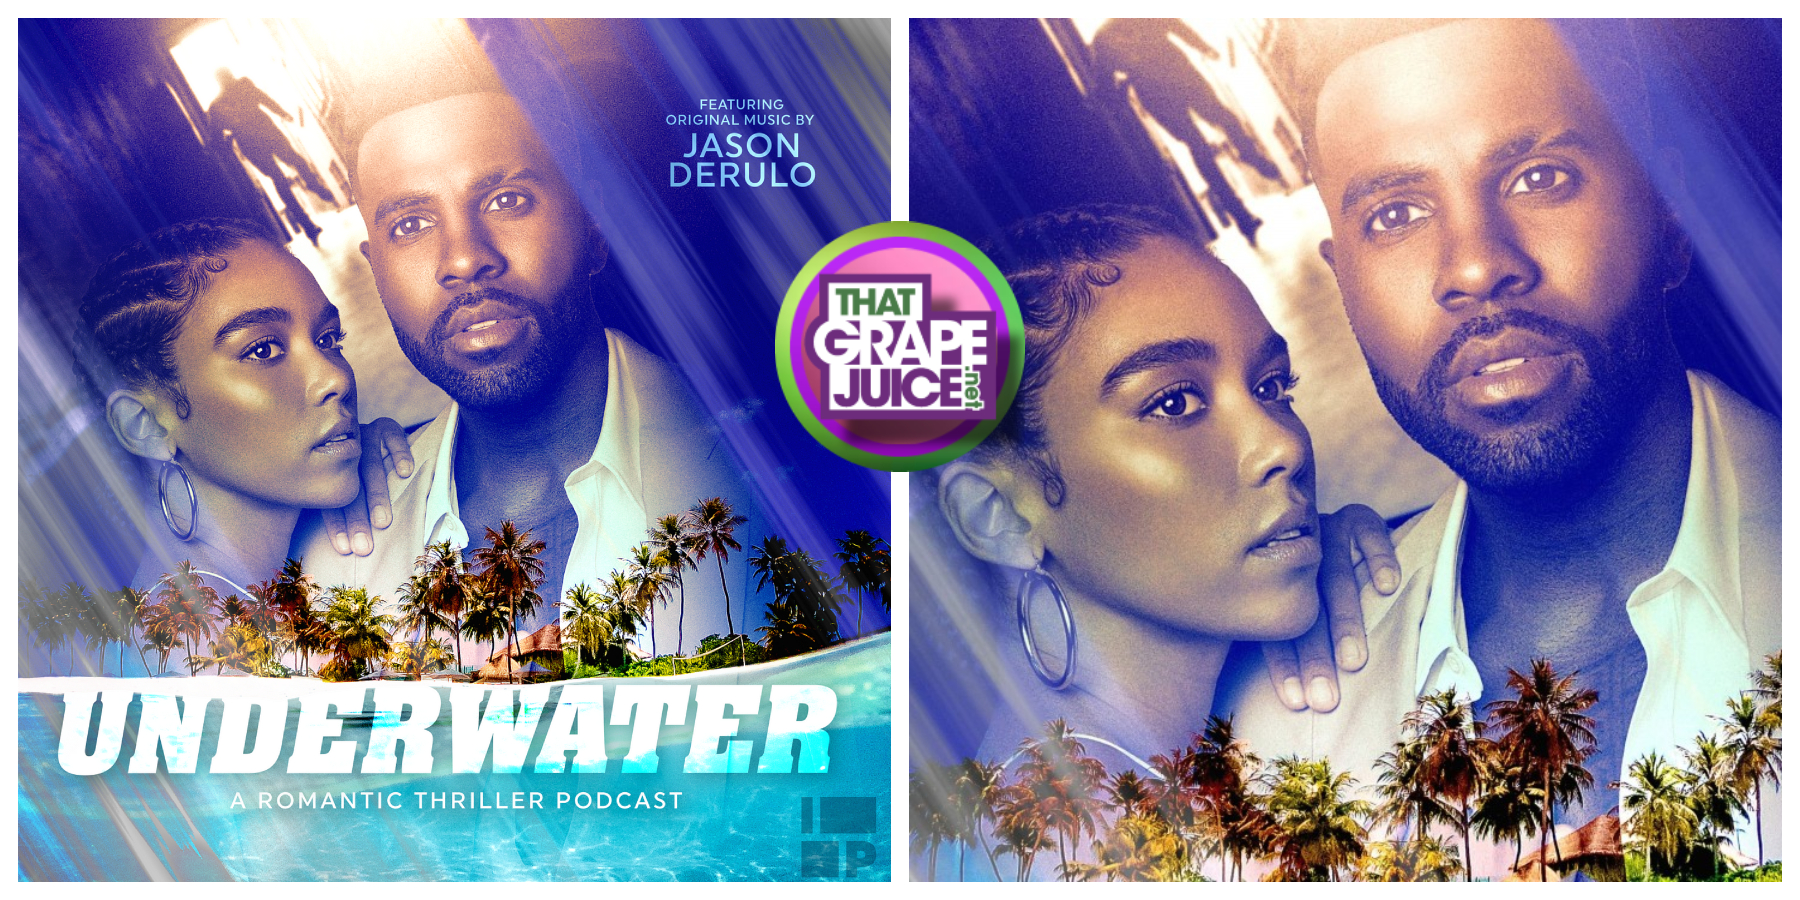 Jason Derulo & Alexandra Shipp Star in Romantic Thriller Podcast ‘UnderWater’